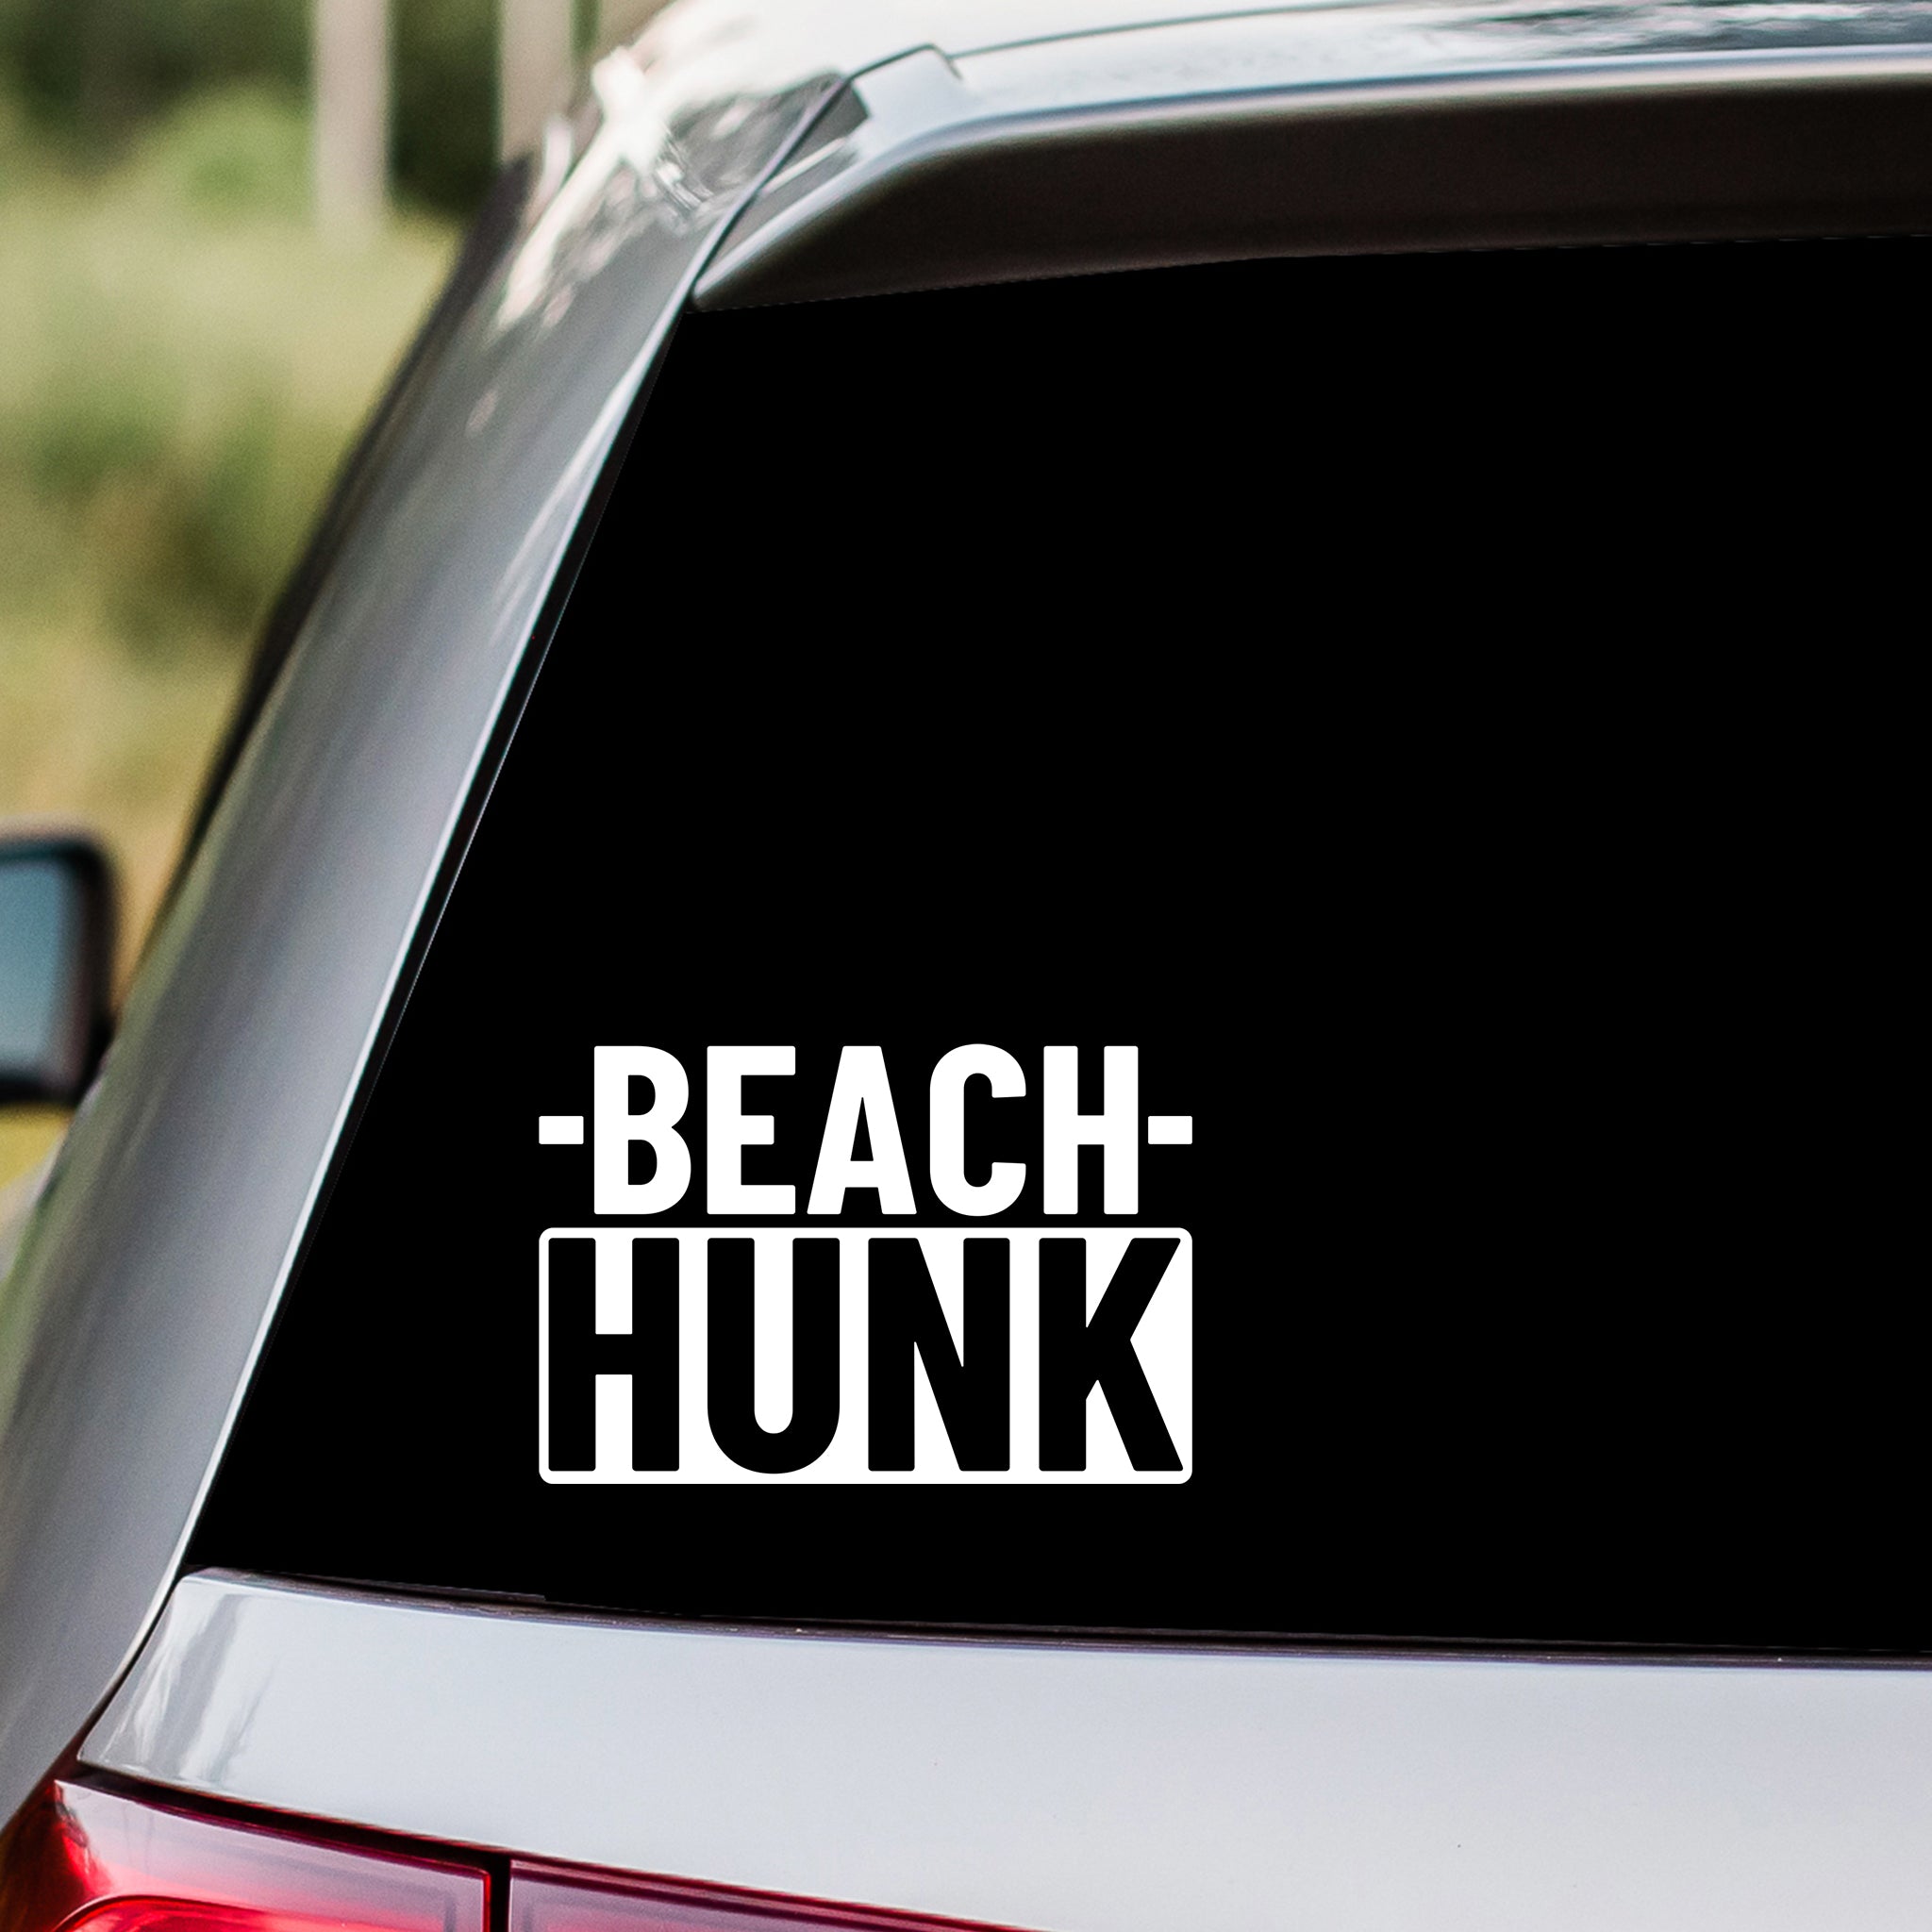 Beach Hunk decal